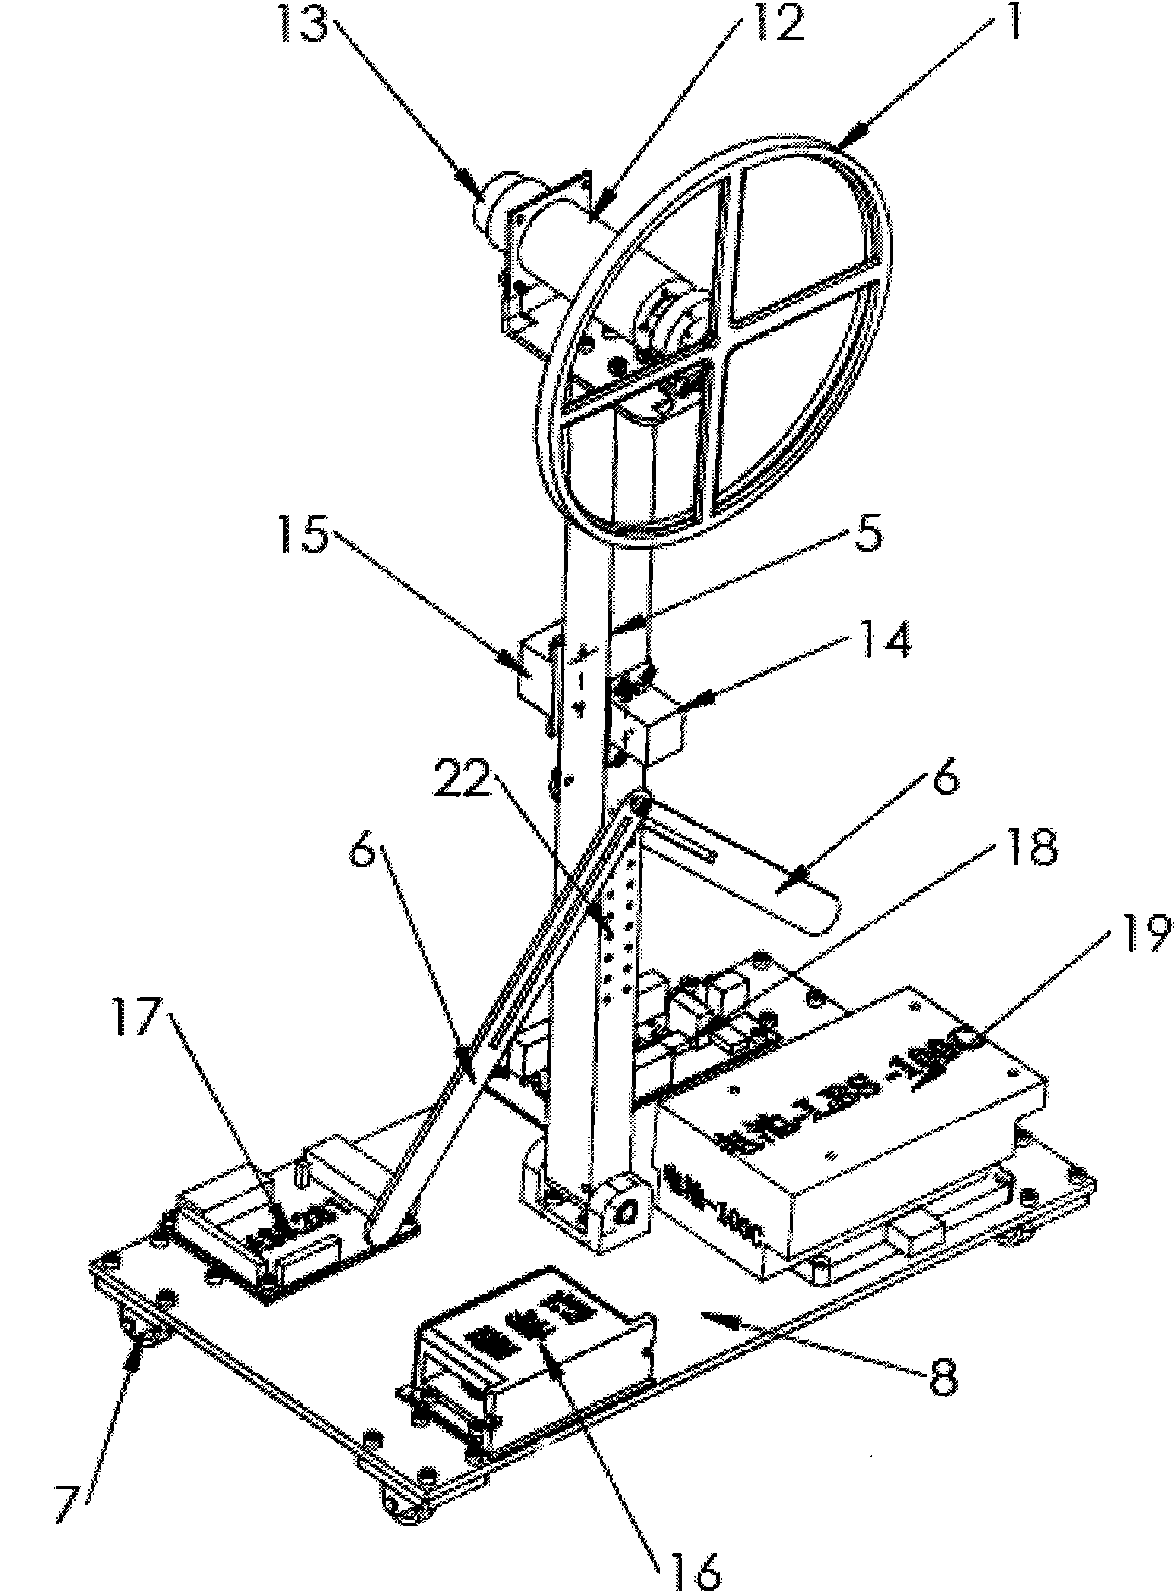 Inverted pendulum balancing control system based on flywheel